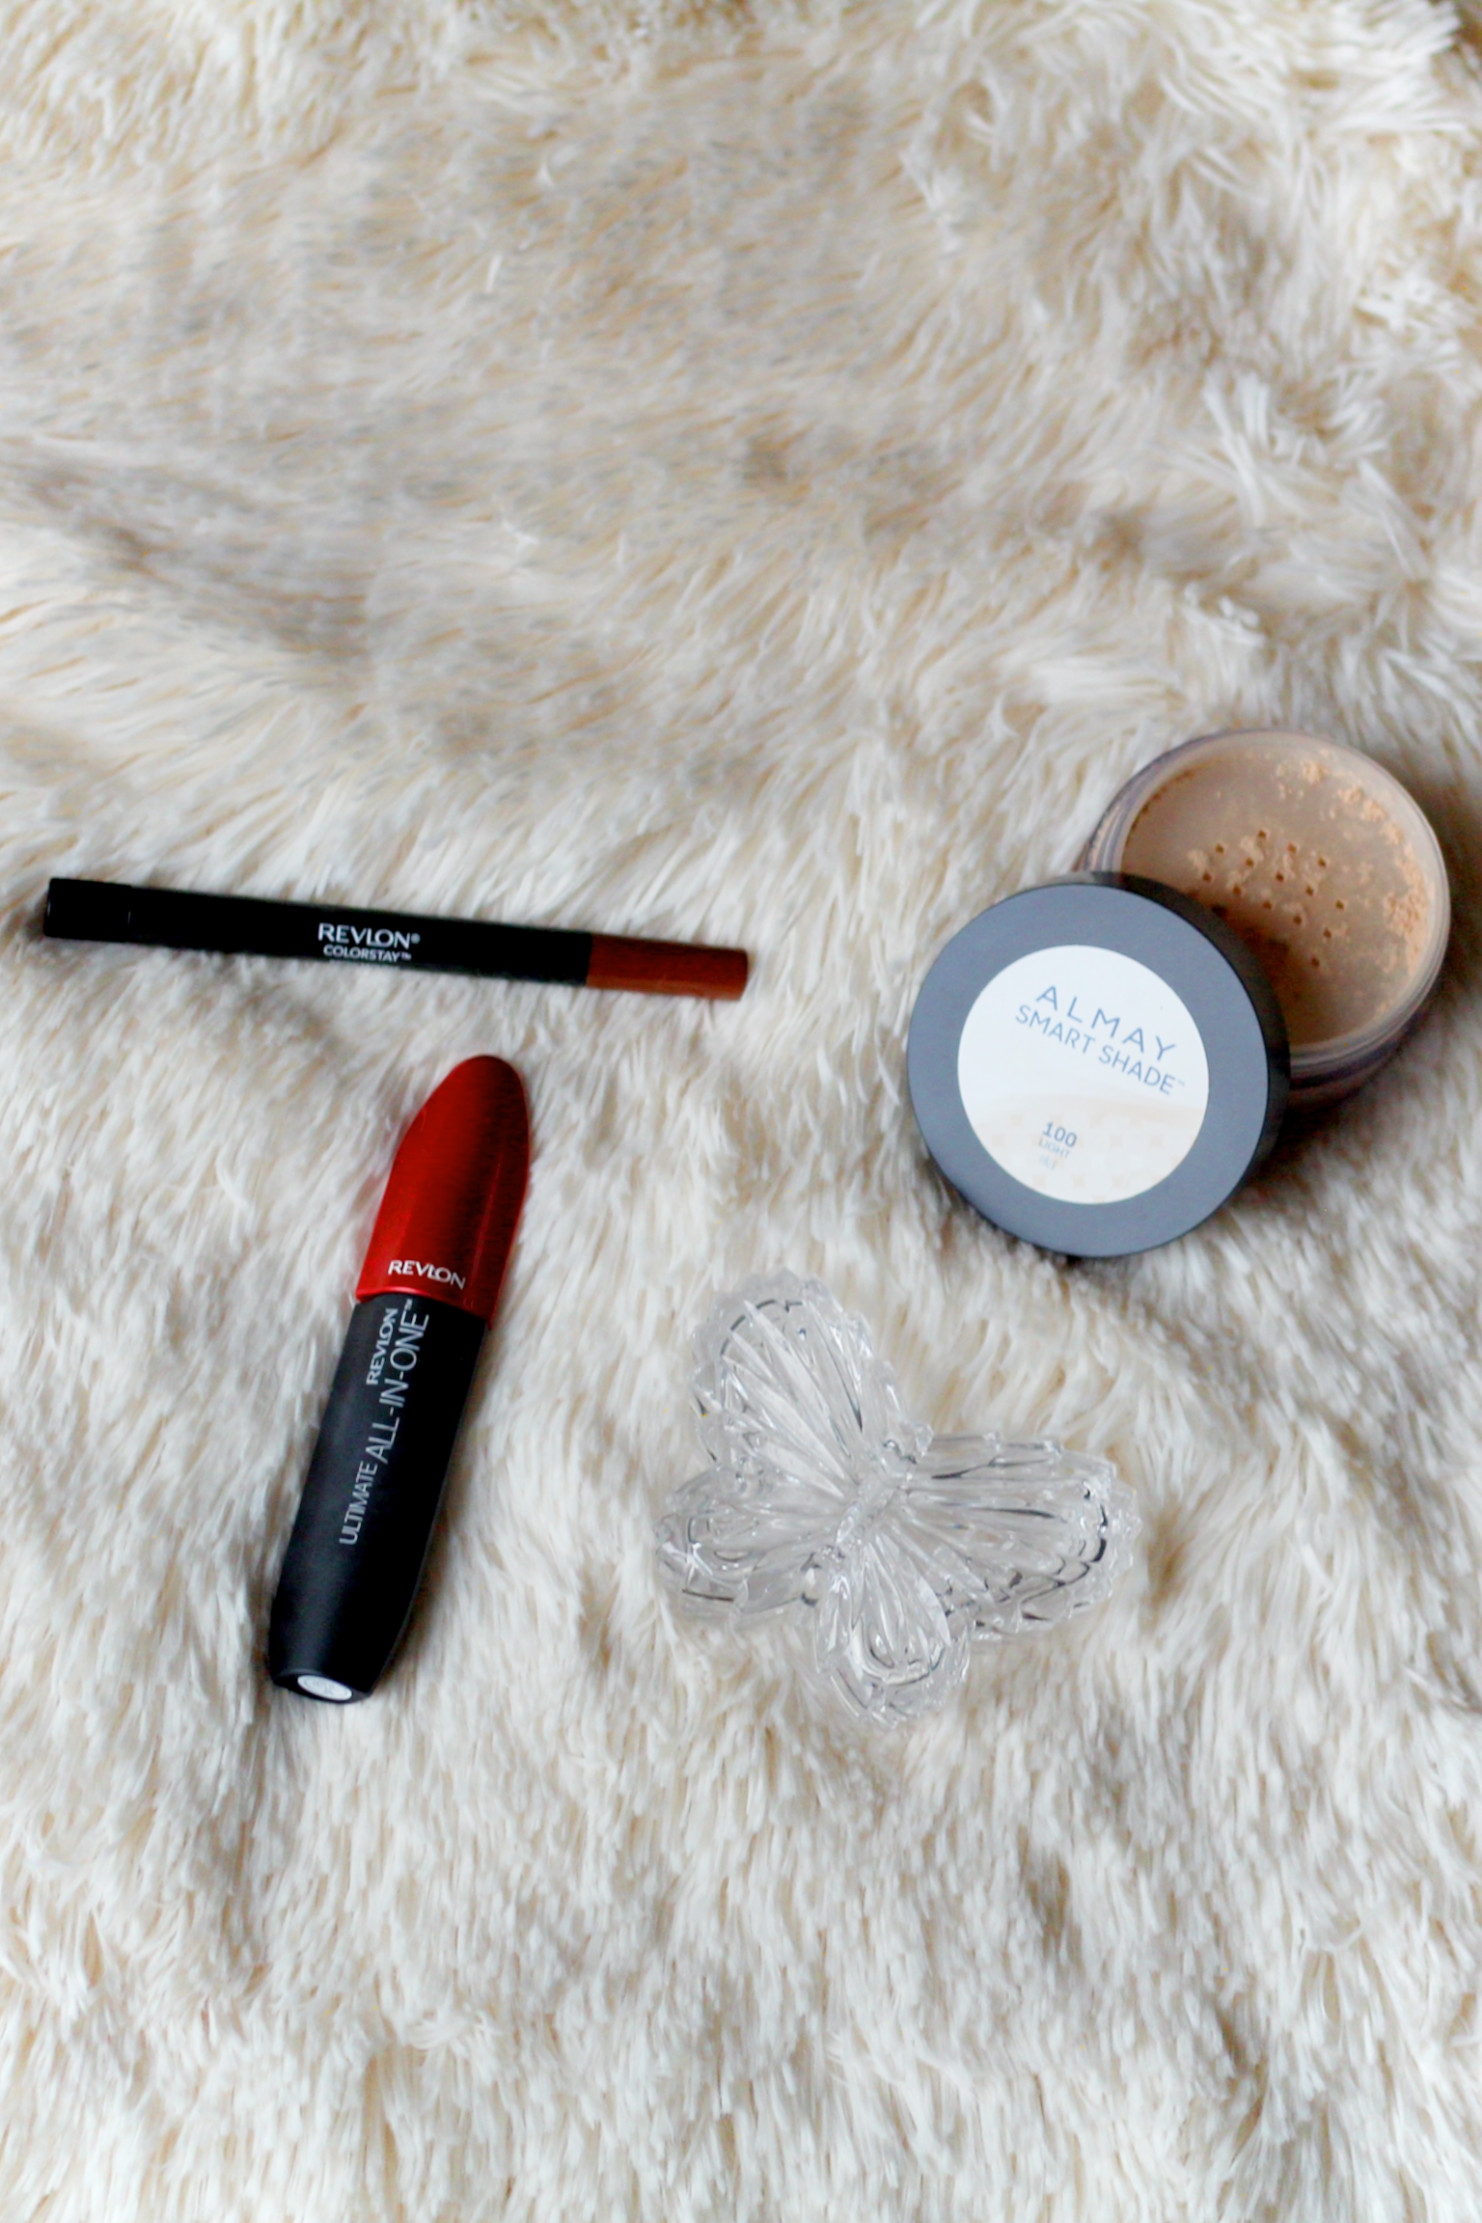 Beauty Review: Eye Makeup & Face Powder